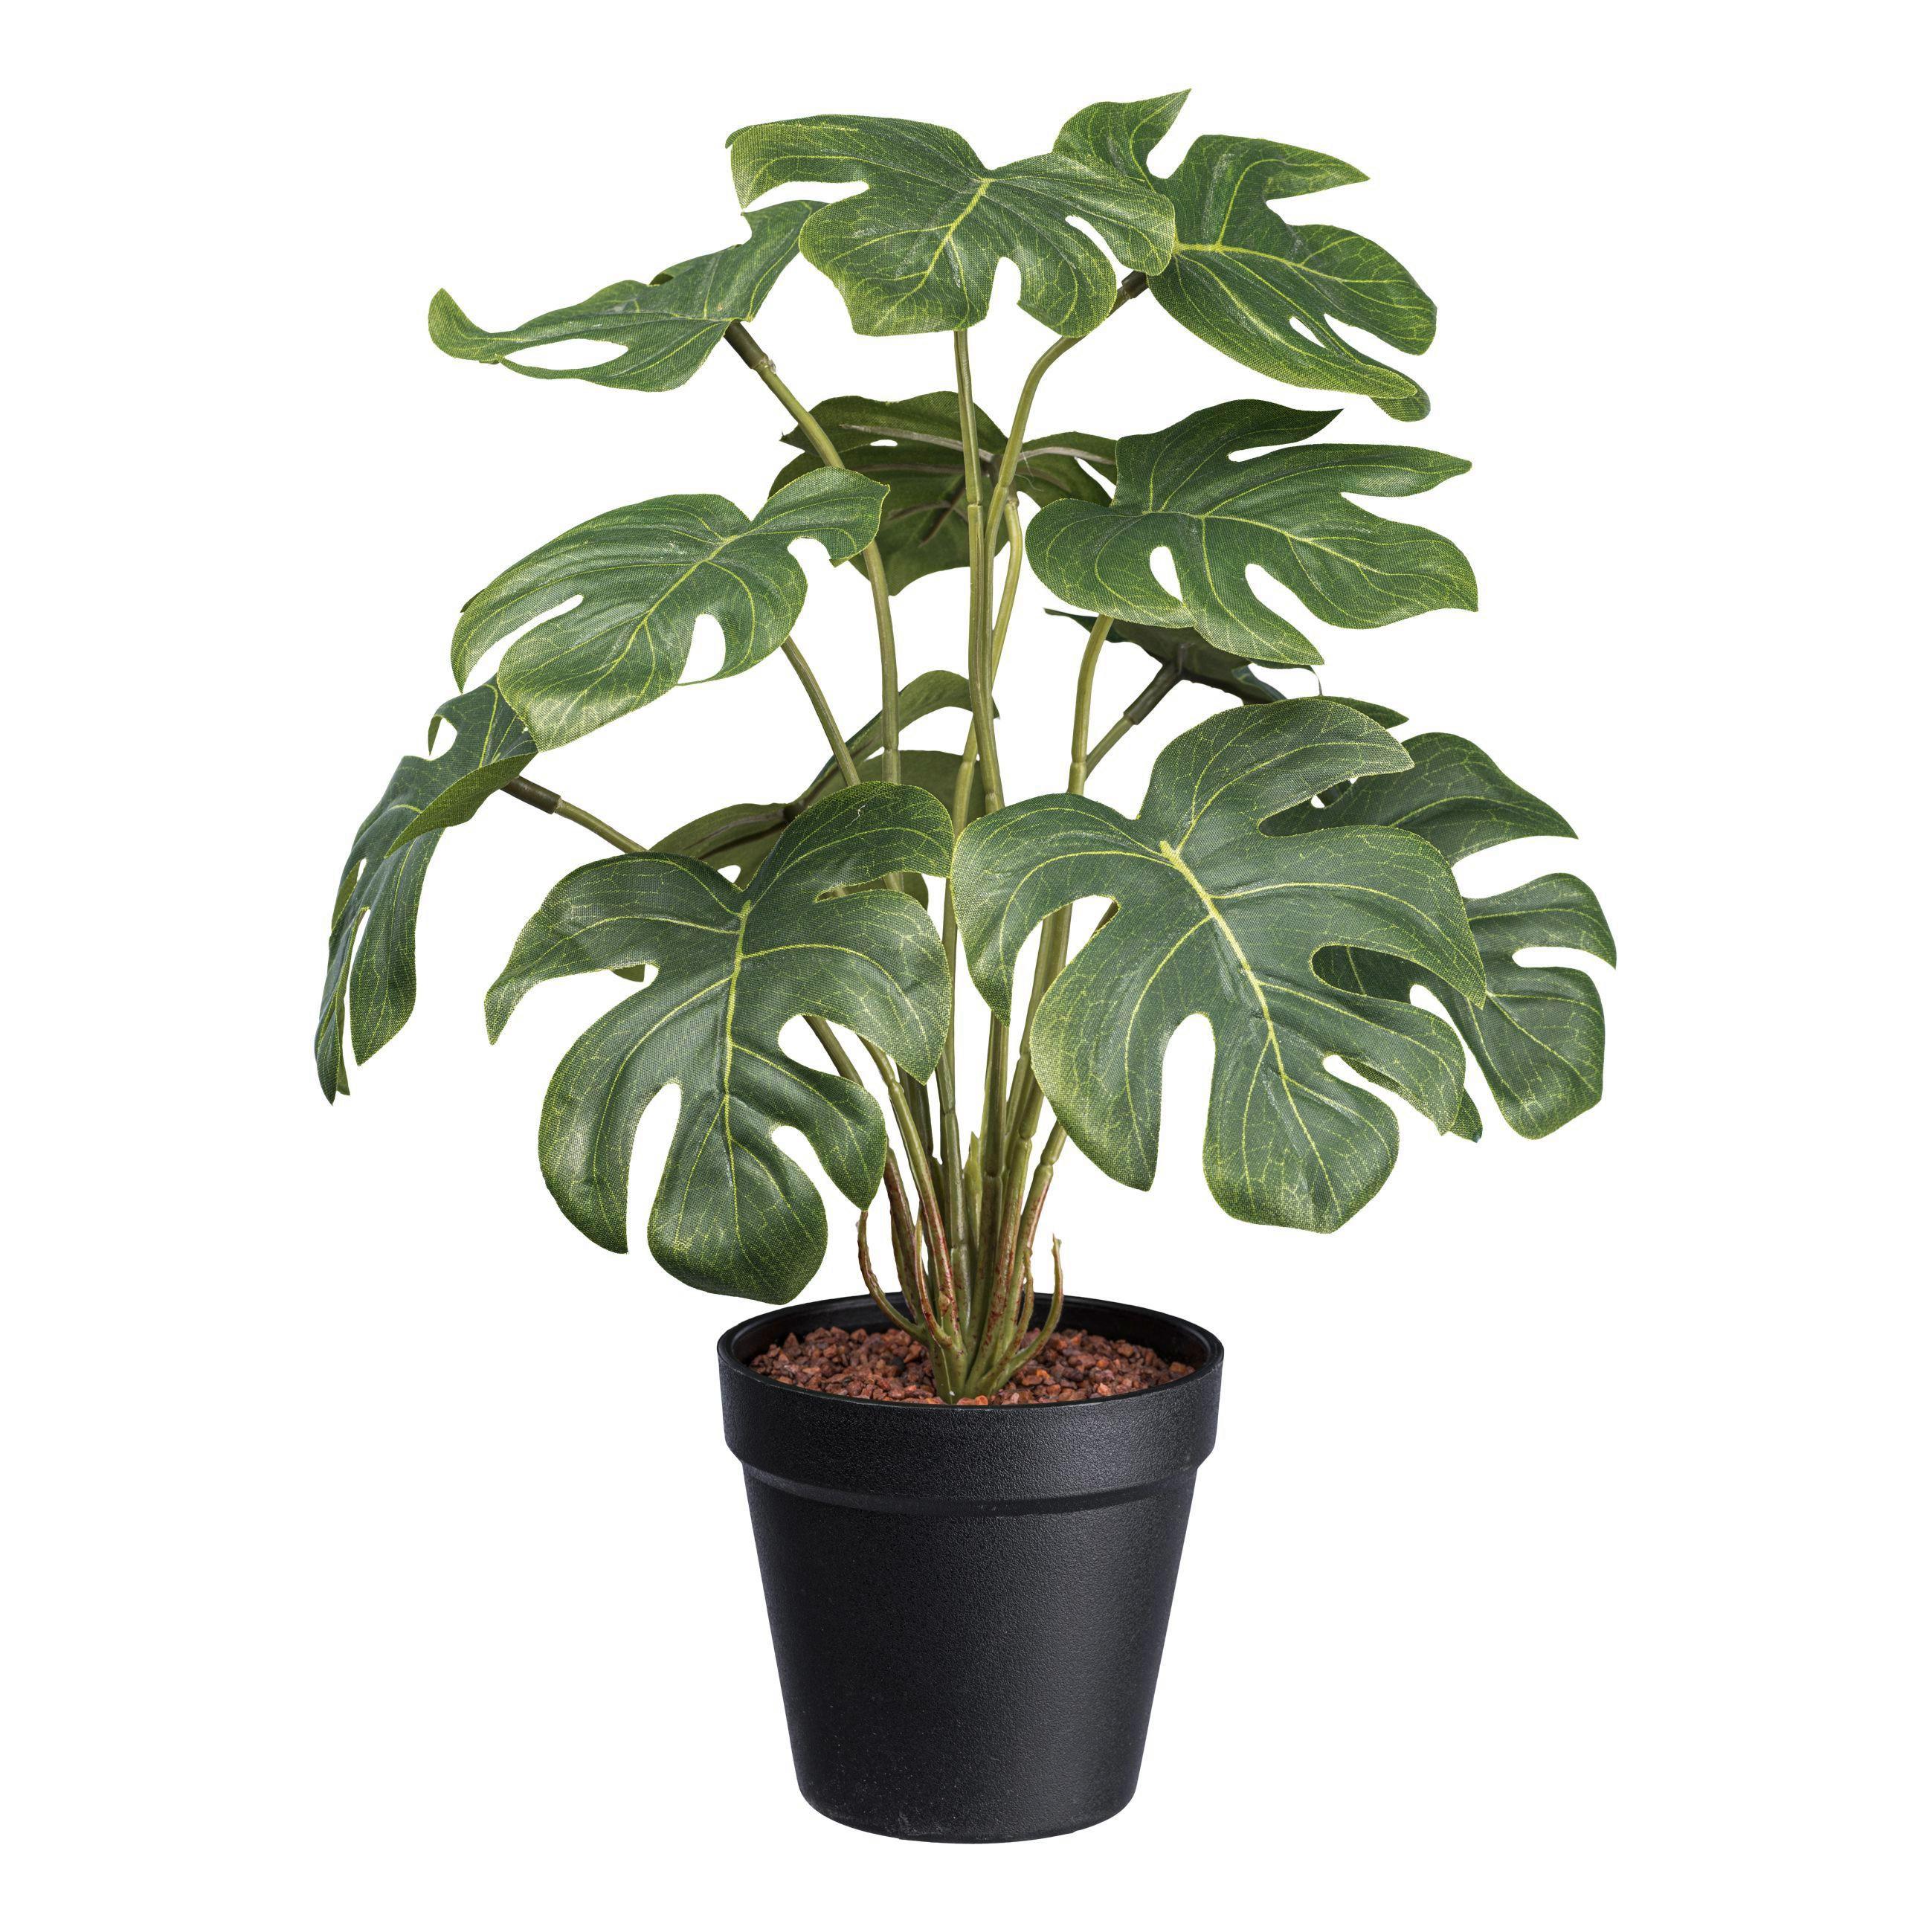 Műnövény Spliphilodendron Ii - Zöld/Fekete, Basics, Műanyag (38cm) - Modern Living